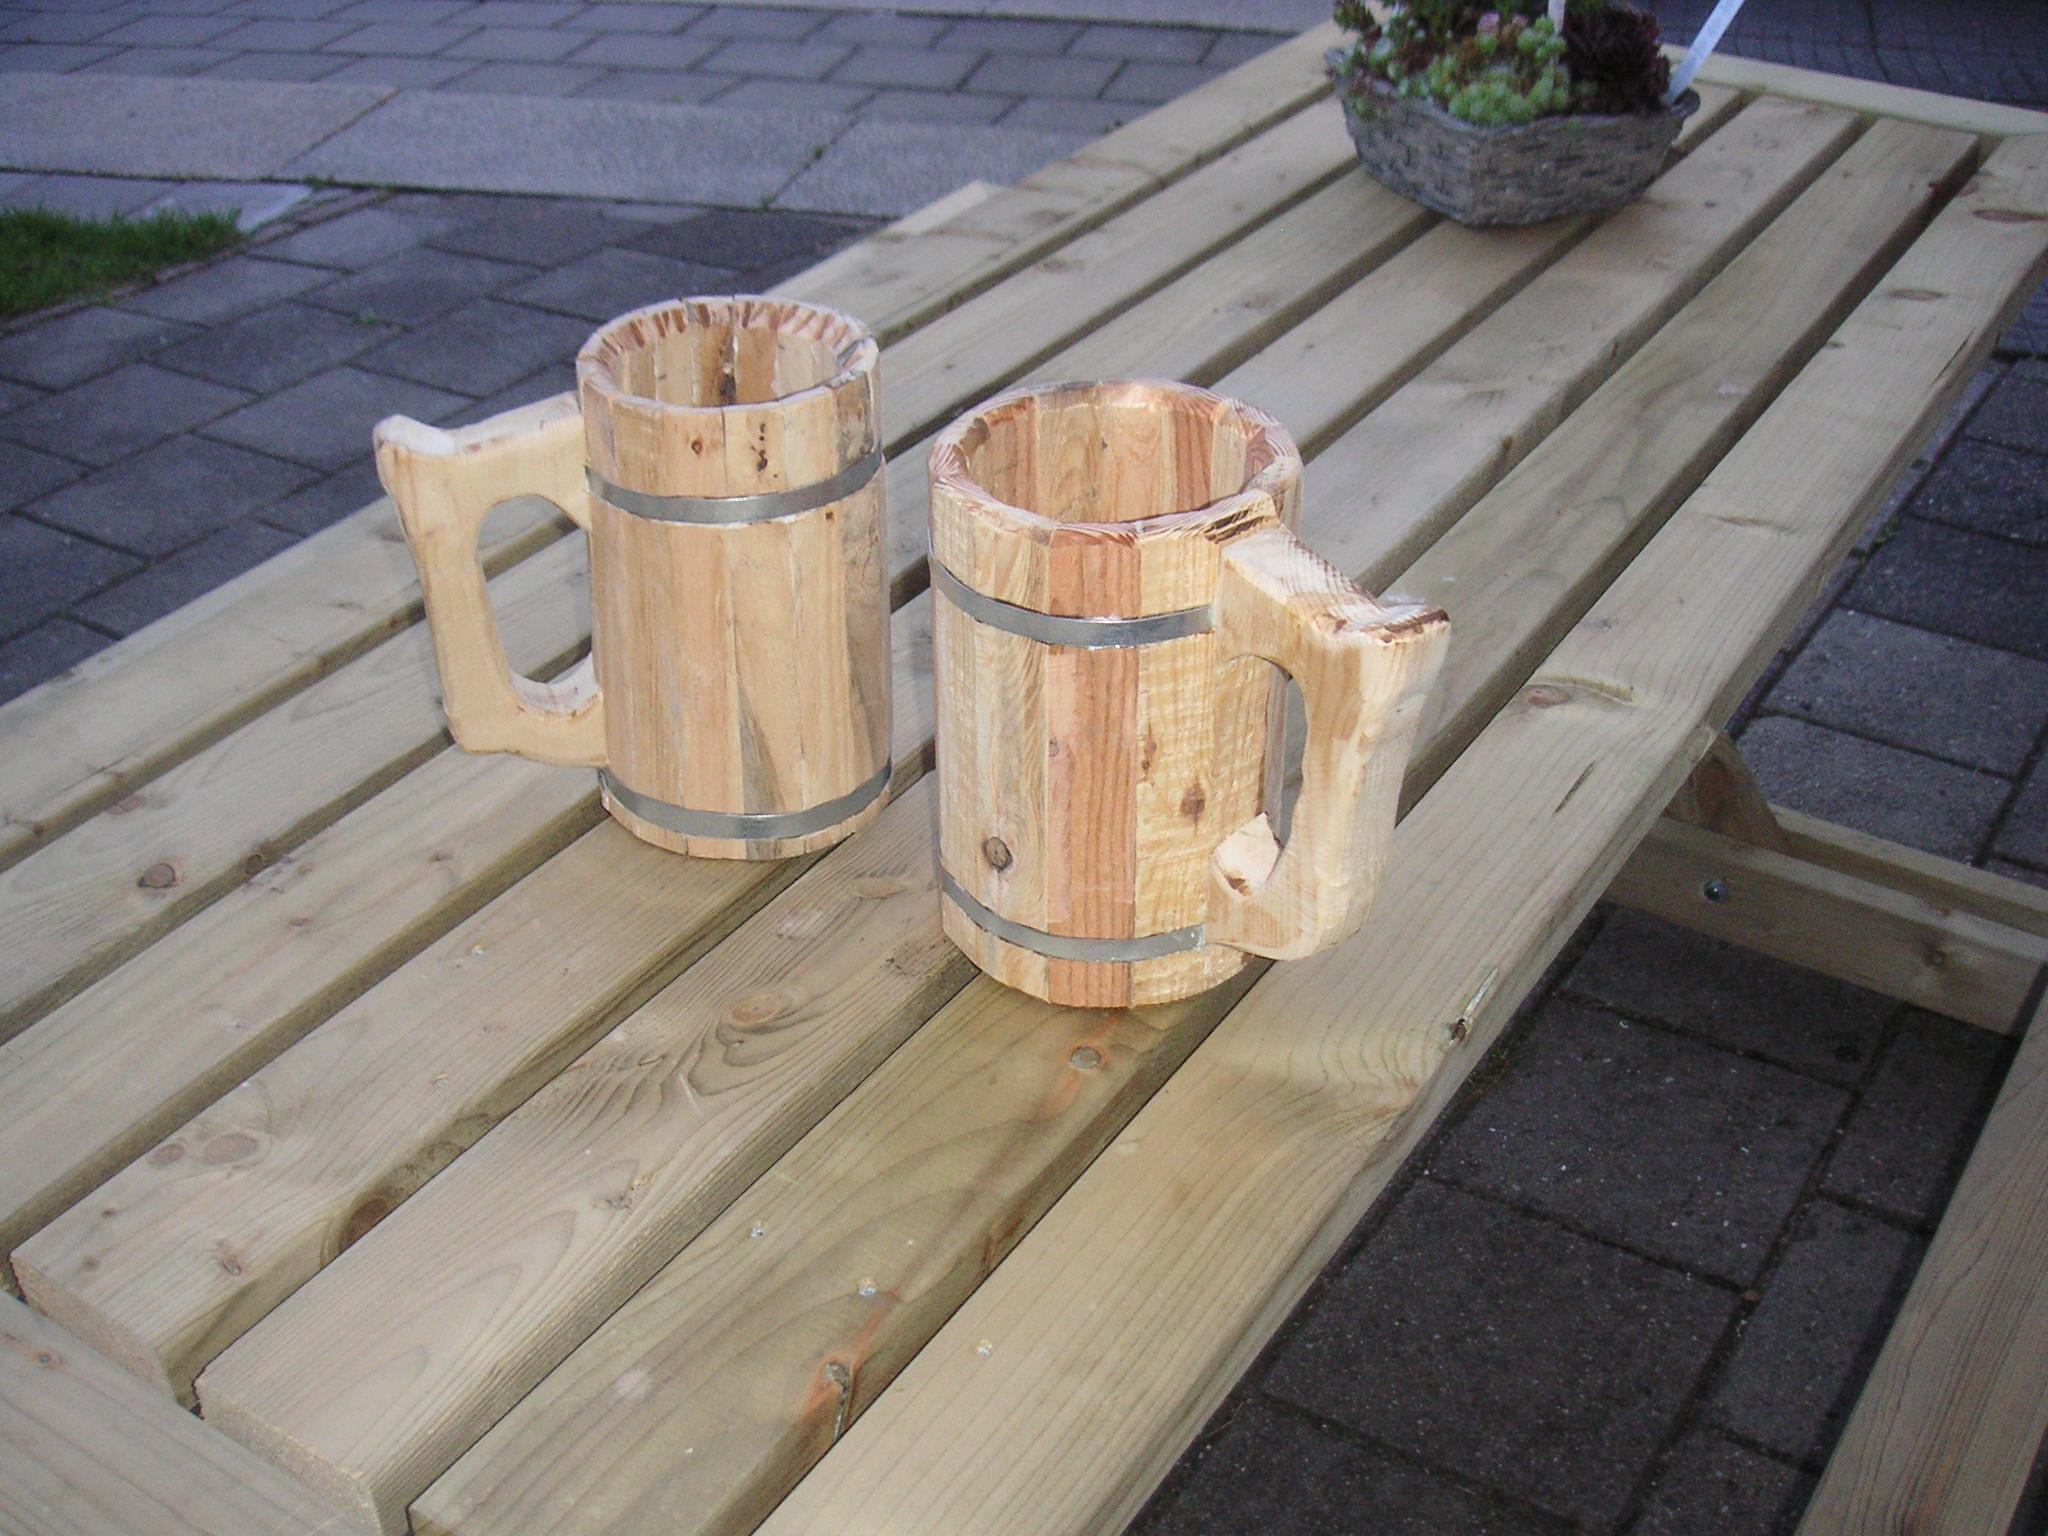 wooden beer mug